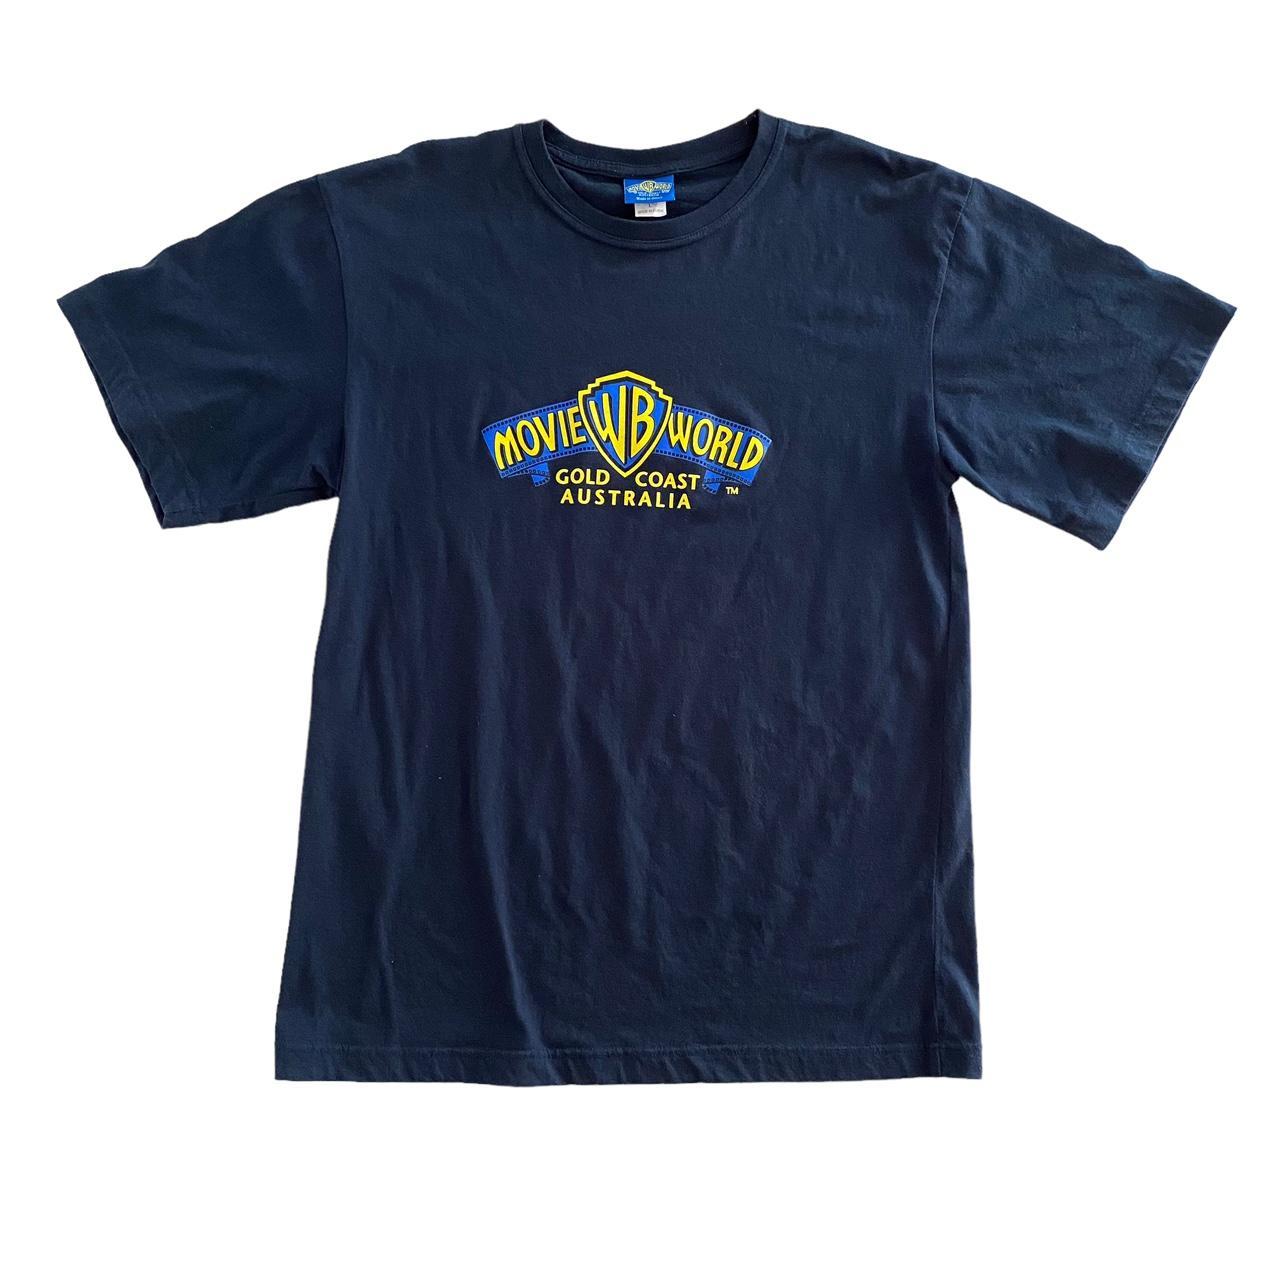 Warner Bros. Men's Navy and Blue T-shirt | Depop